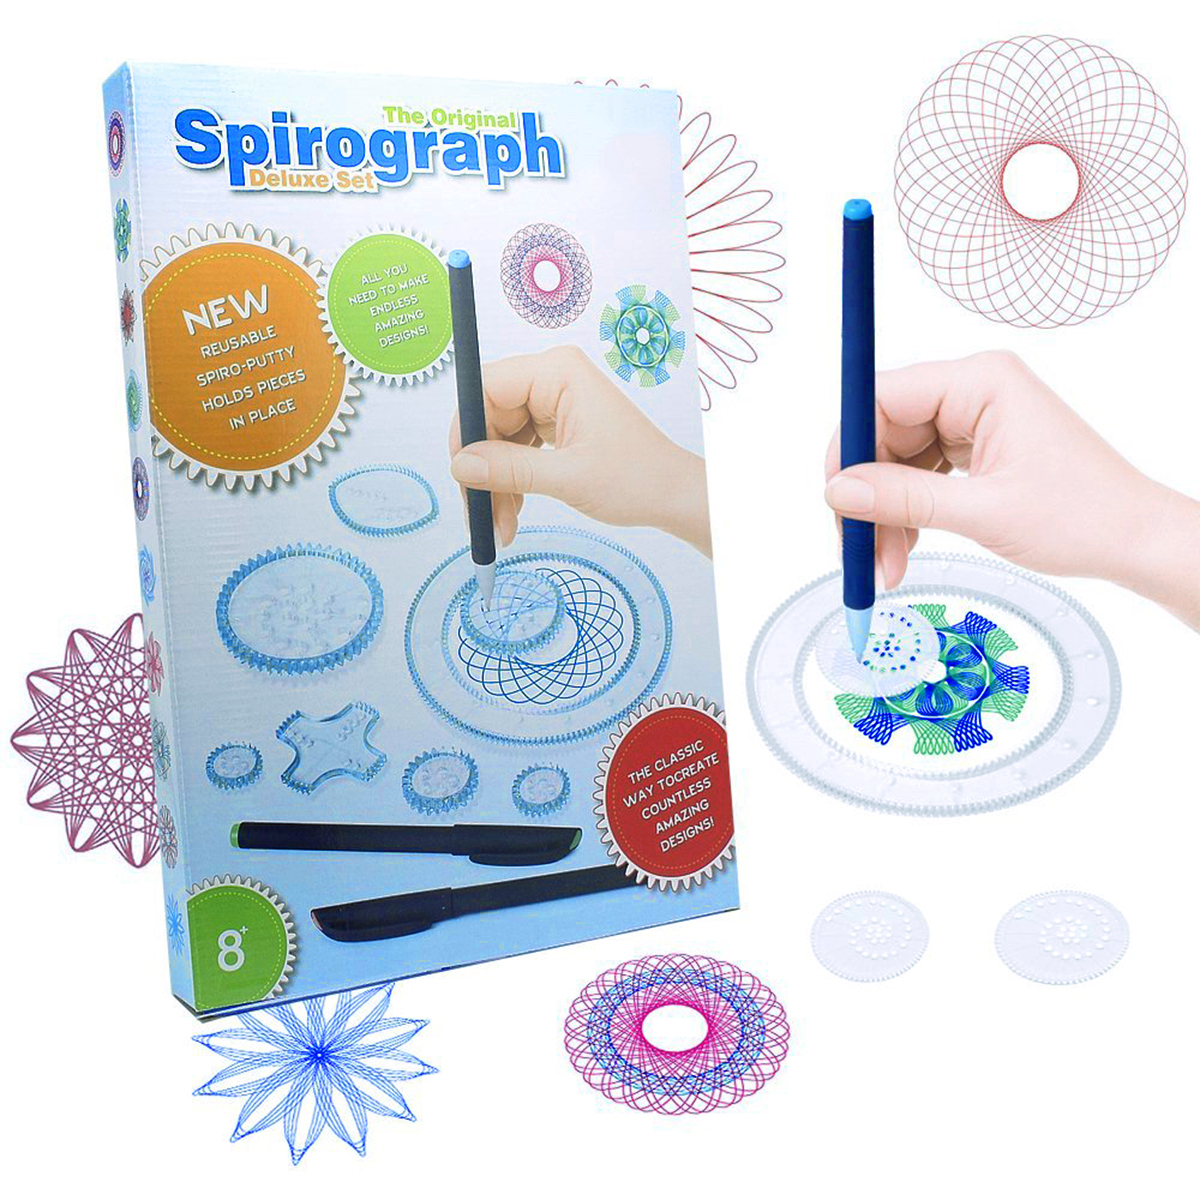 Original Spirograph Design Set Geometric Drawing Ruler Kids Spiral Art Craft Creation Education Toy 13